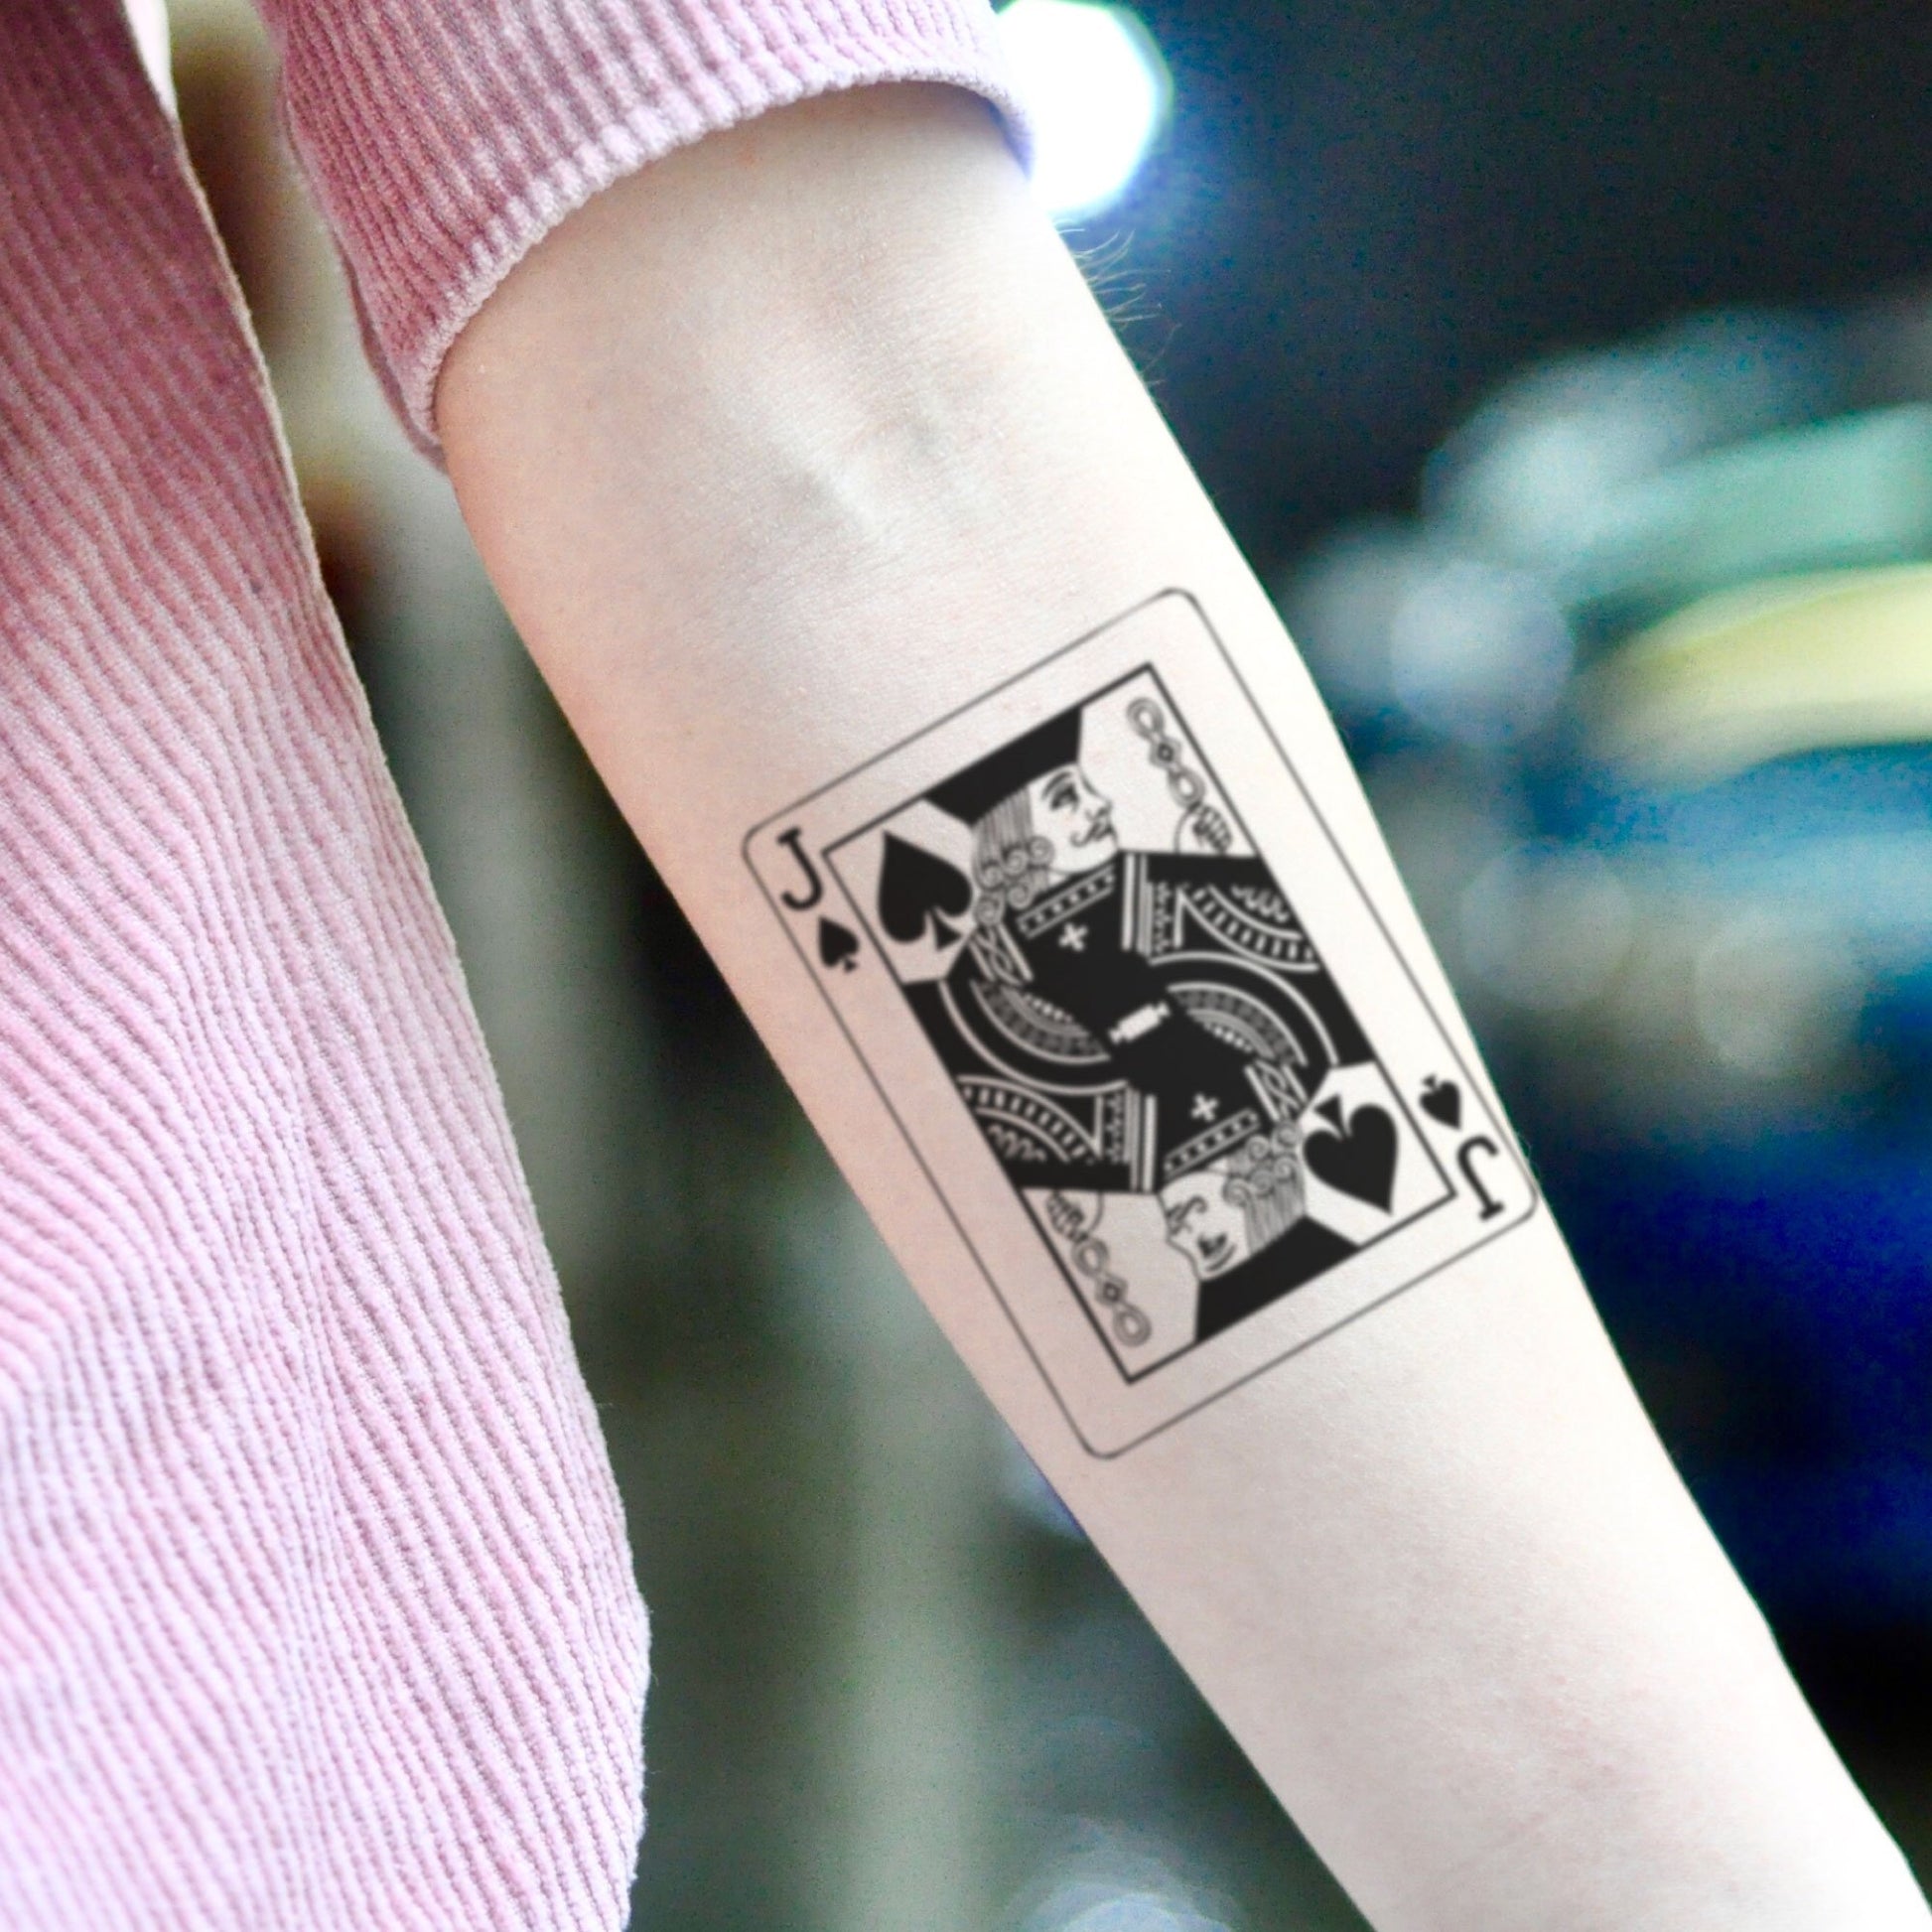 fake small jack of all trades hearts spades poker card illustrative temporary tattoo sticker design idea on inner arm